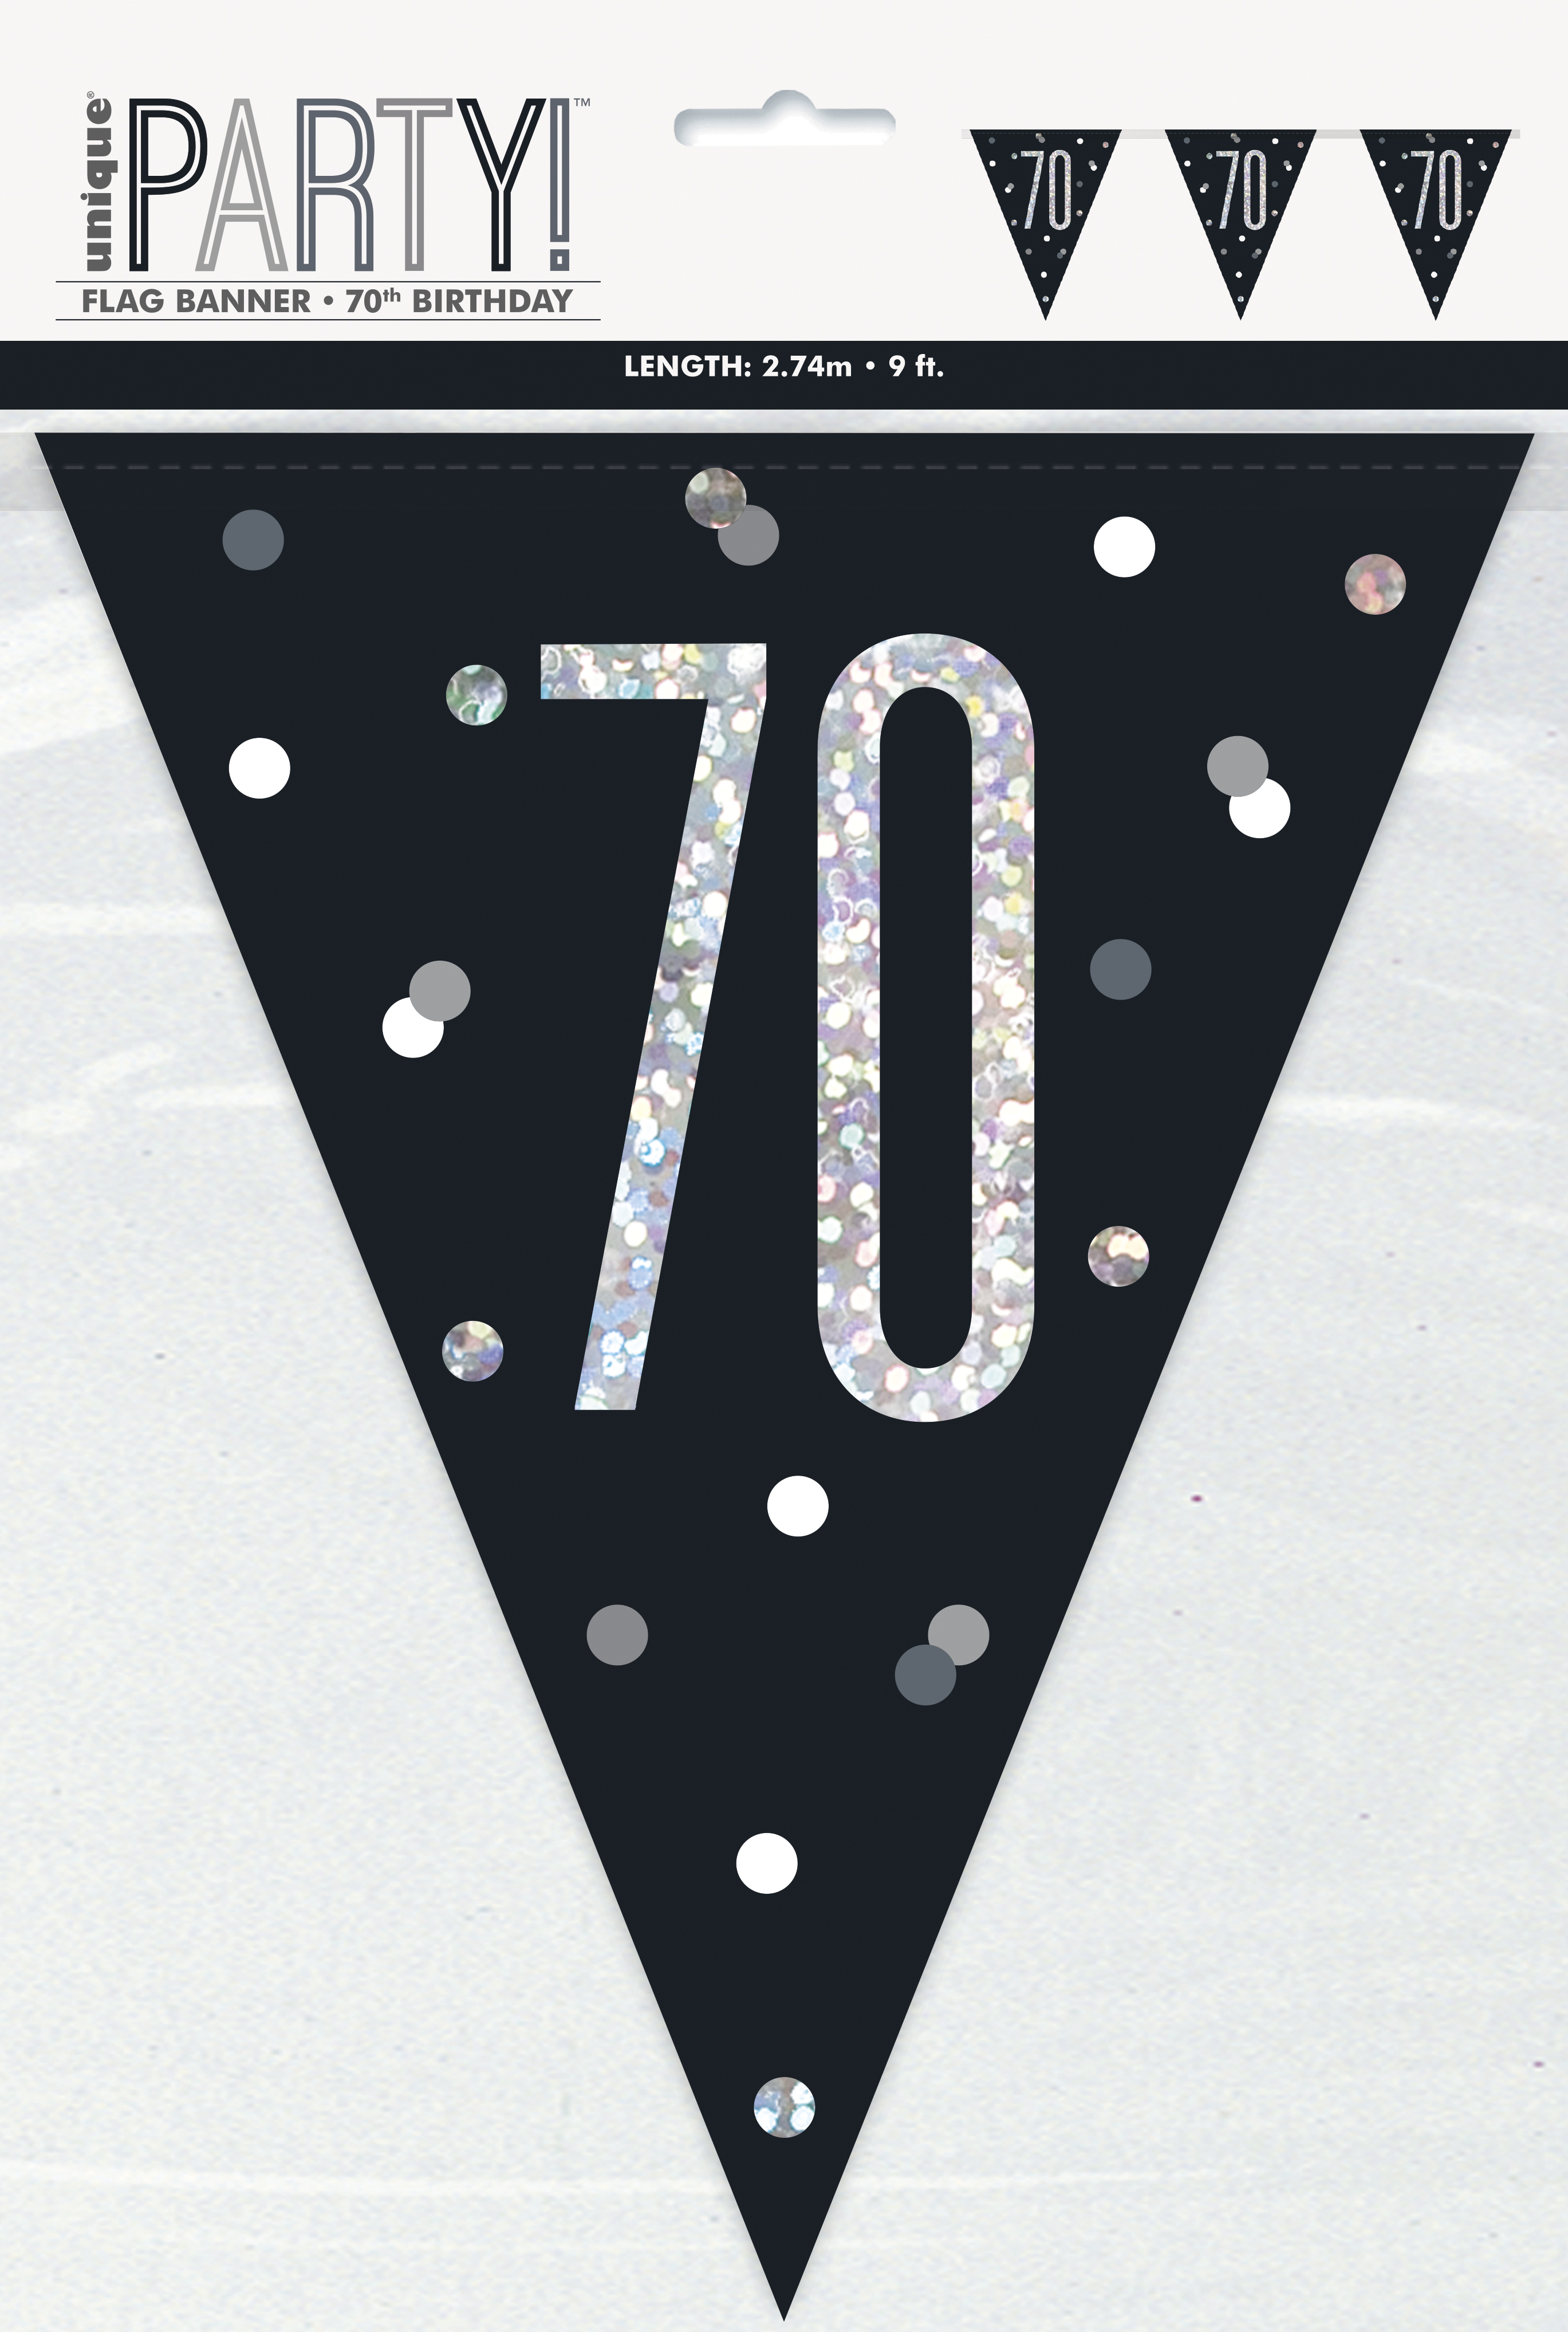 70th BIRTHDAY GLITZ BLACK PRISMATIC PLASTIC PENNANT BANNER